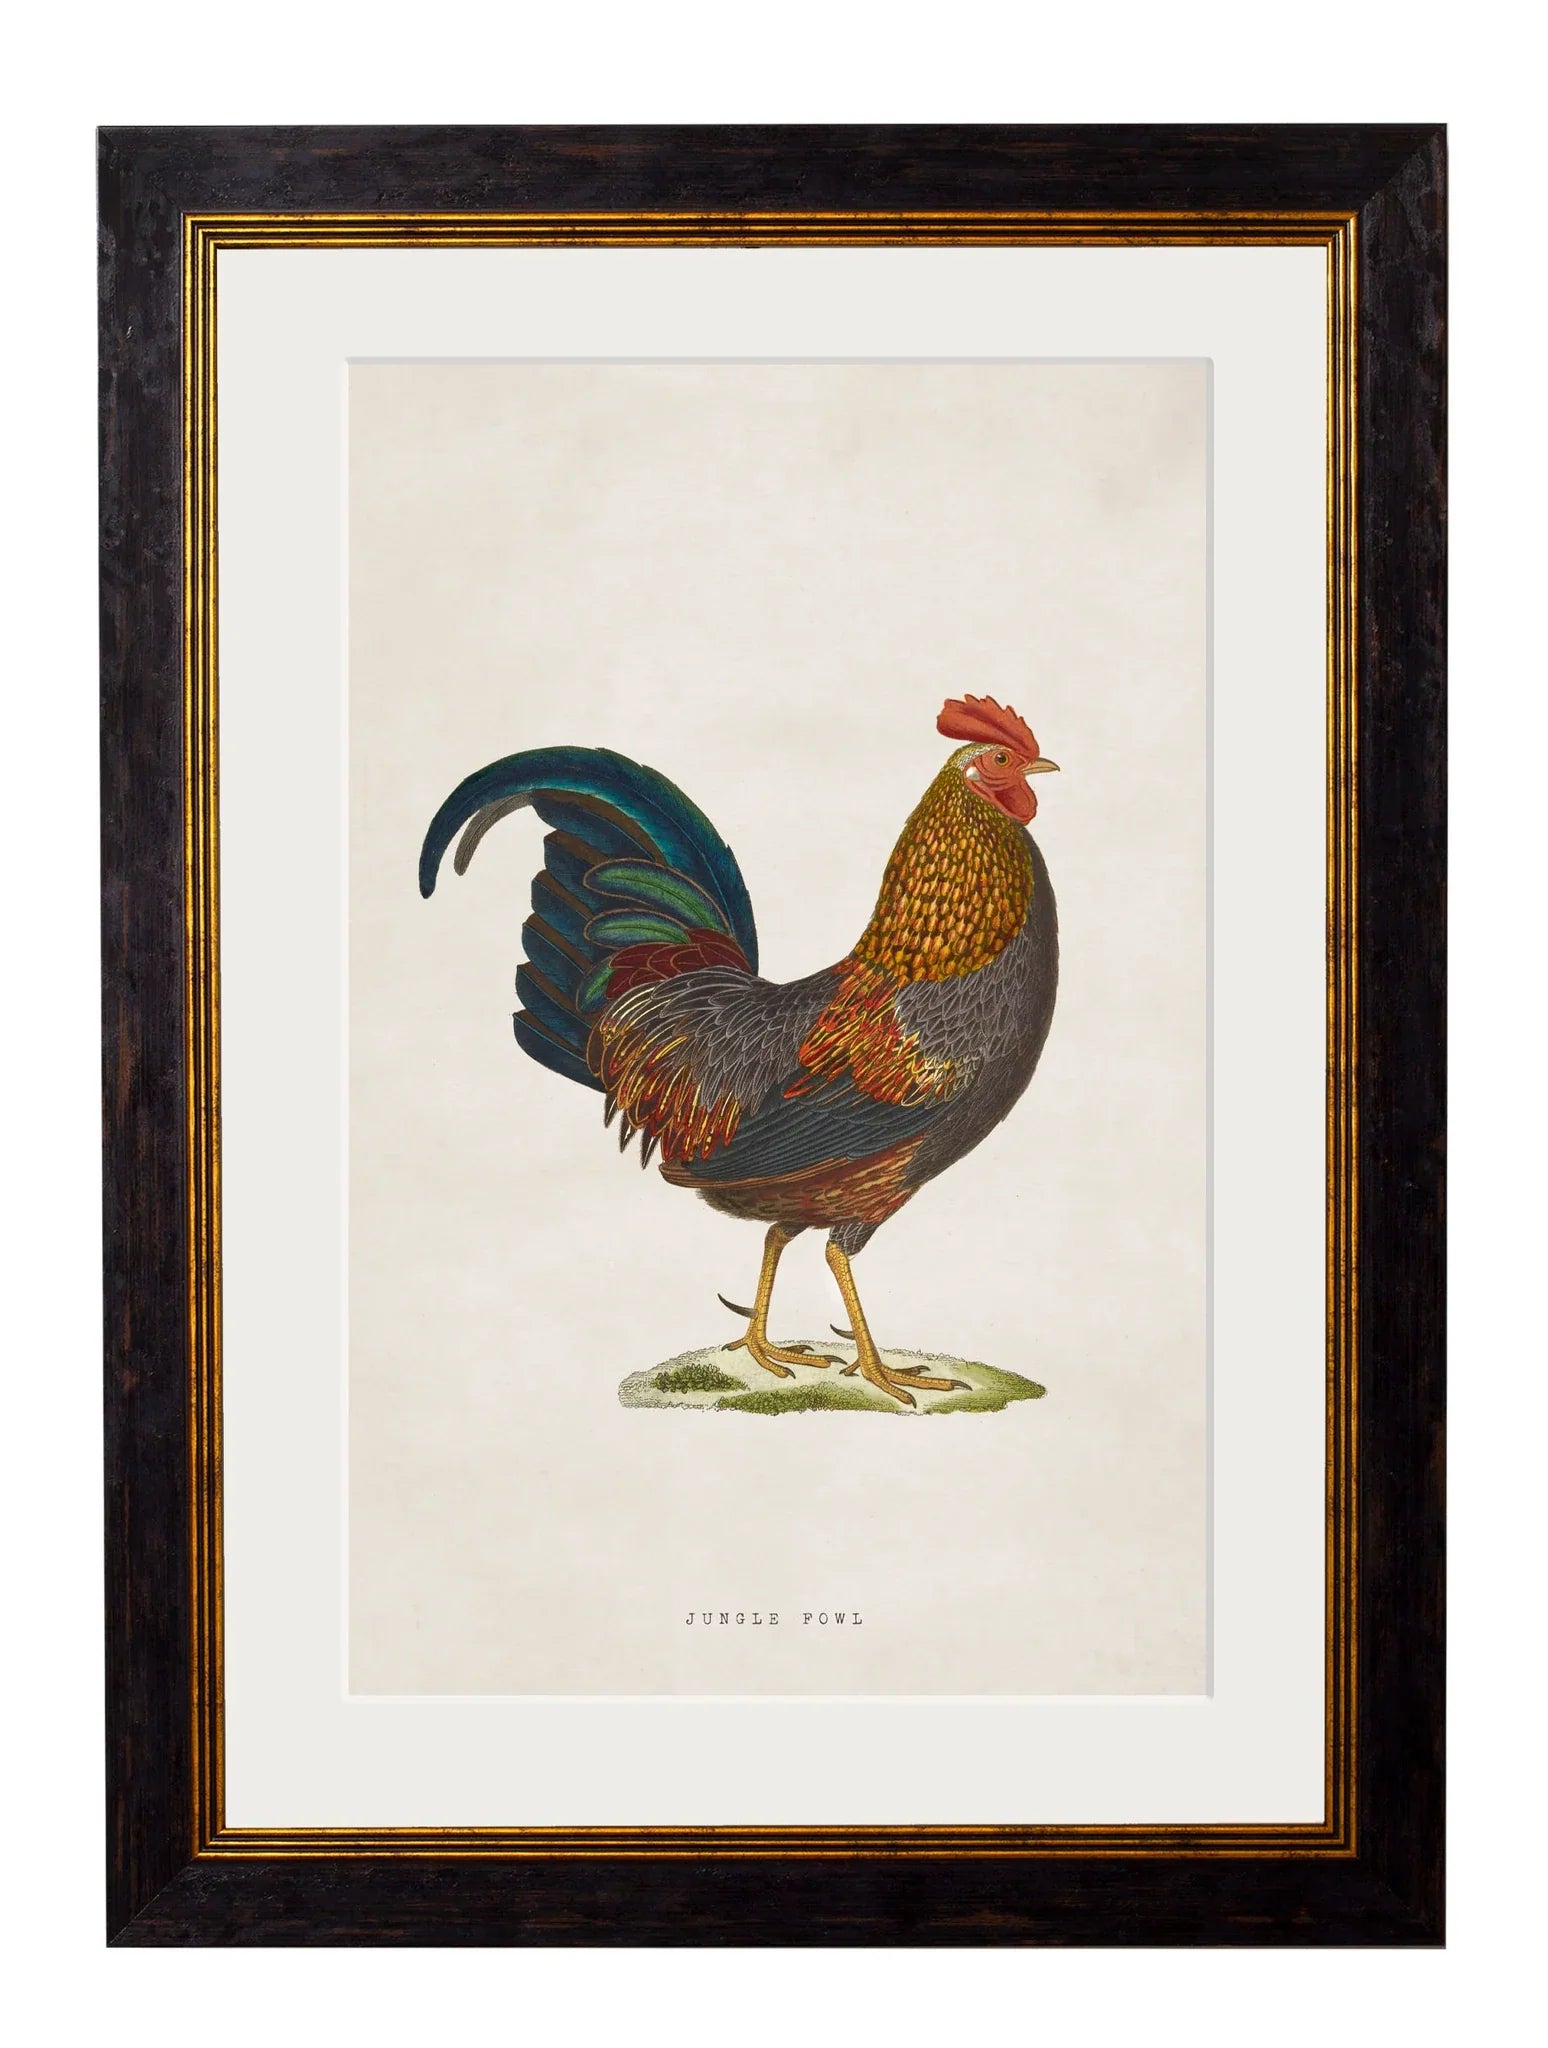 C.1838 Junglefowl Frames for sale - Woodcock and Cavendish